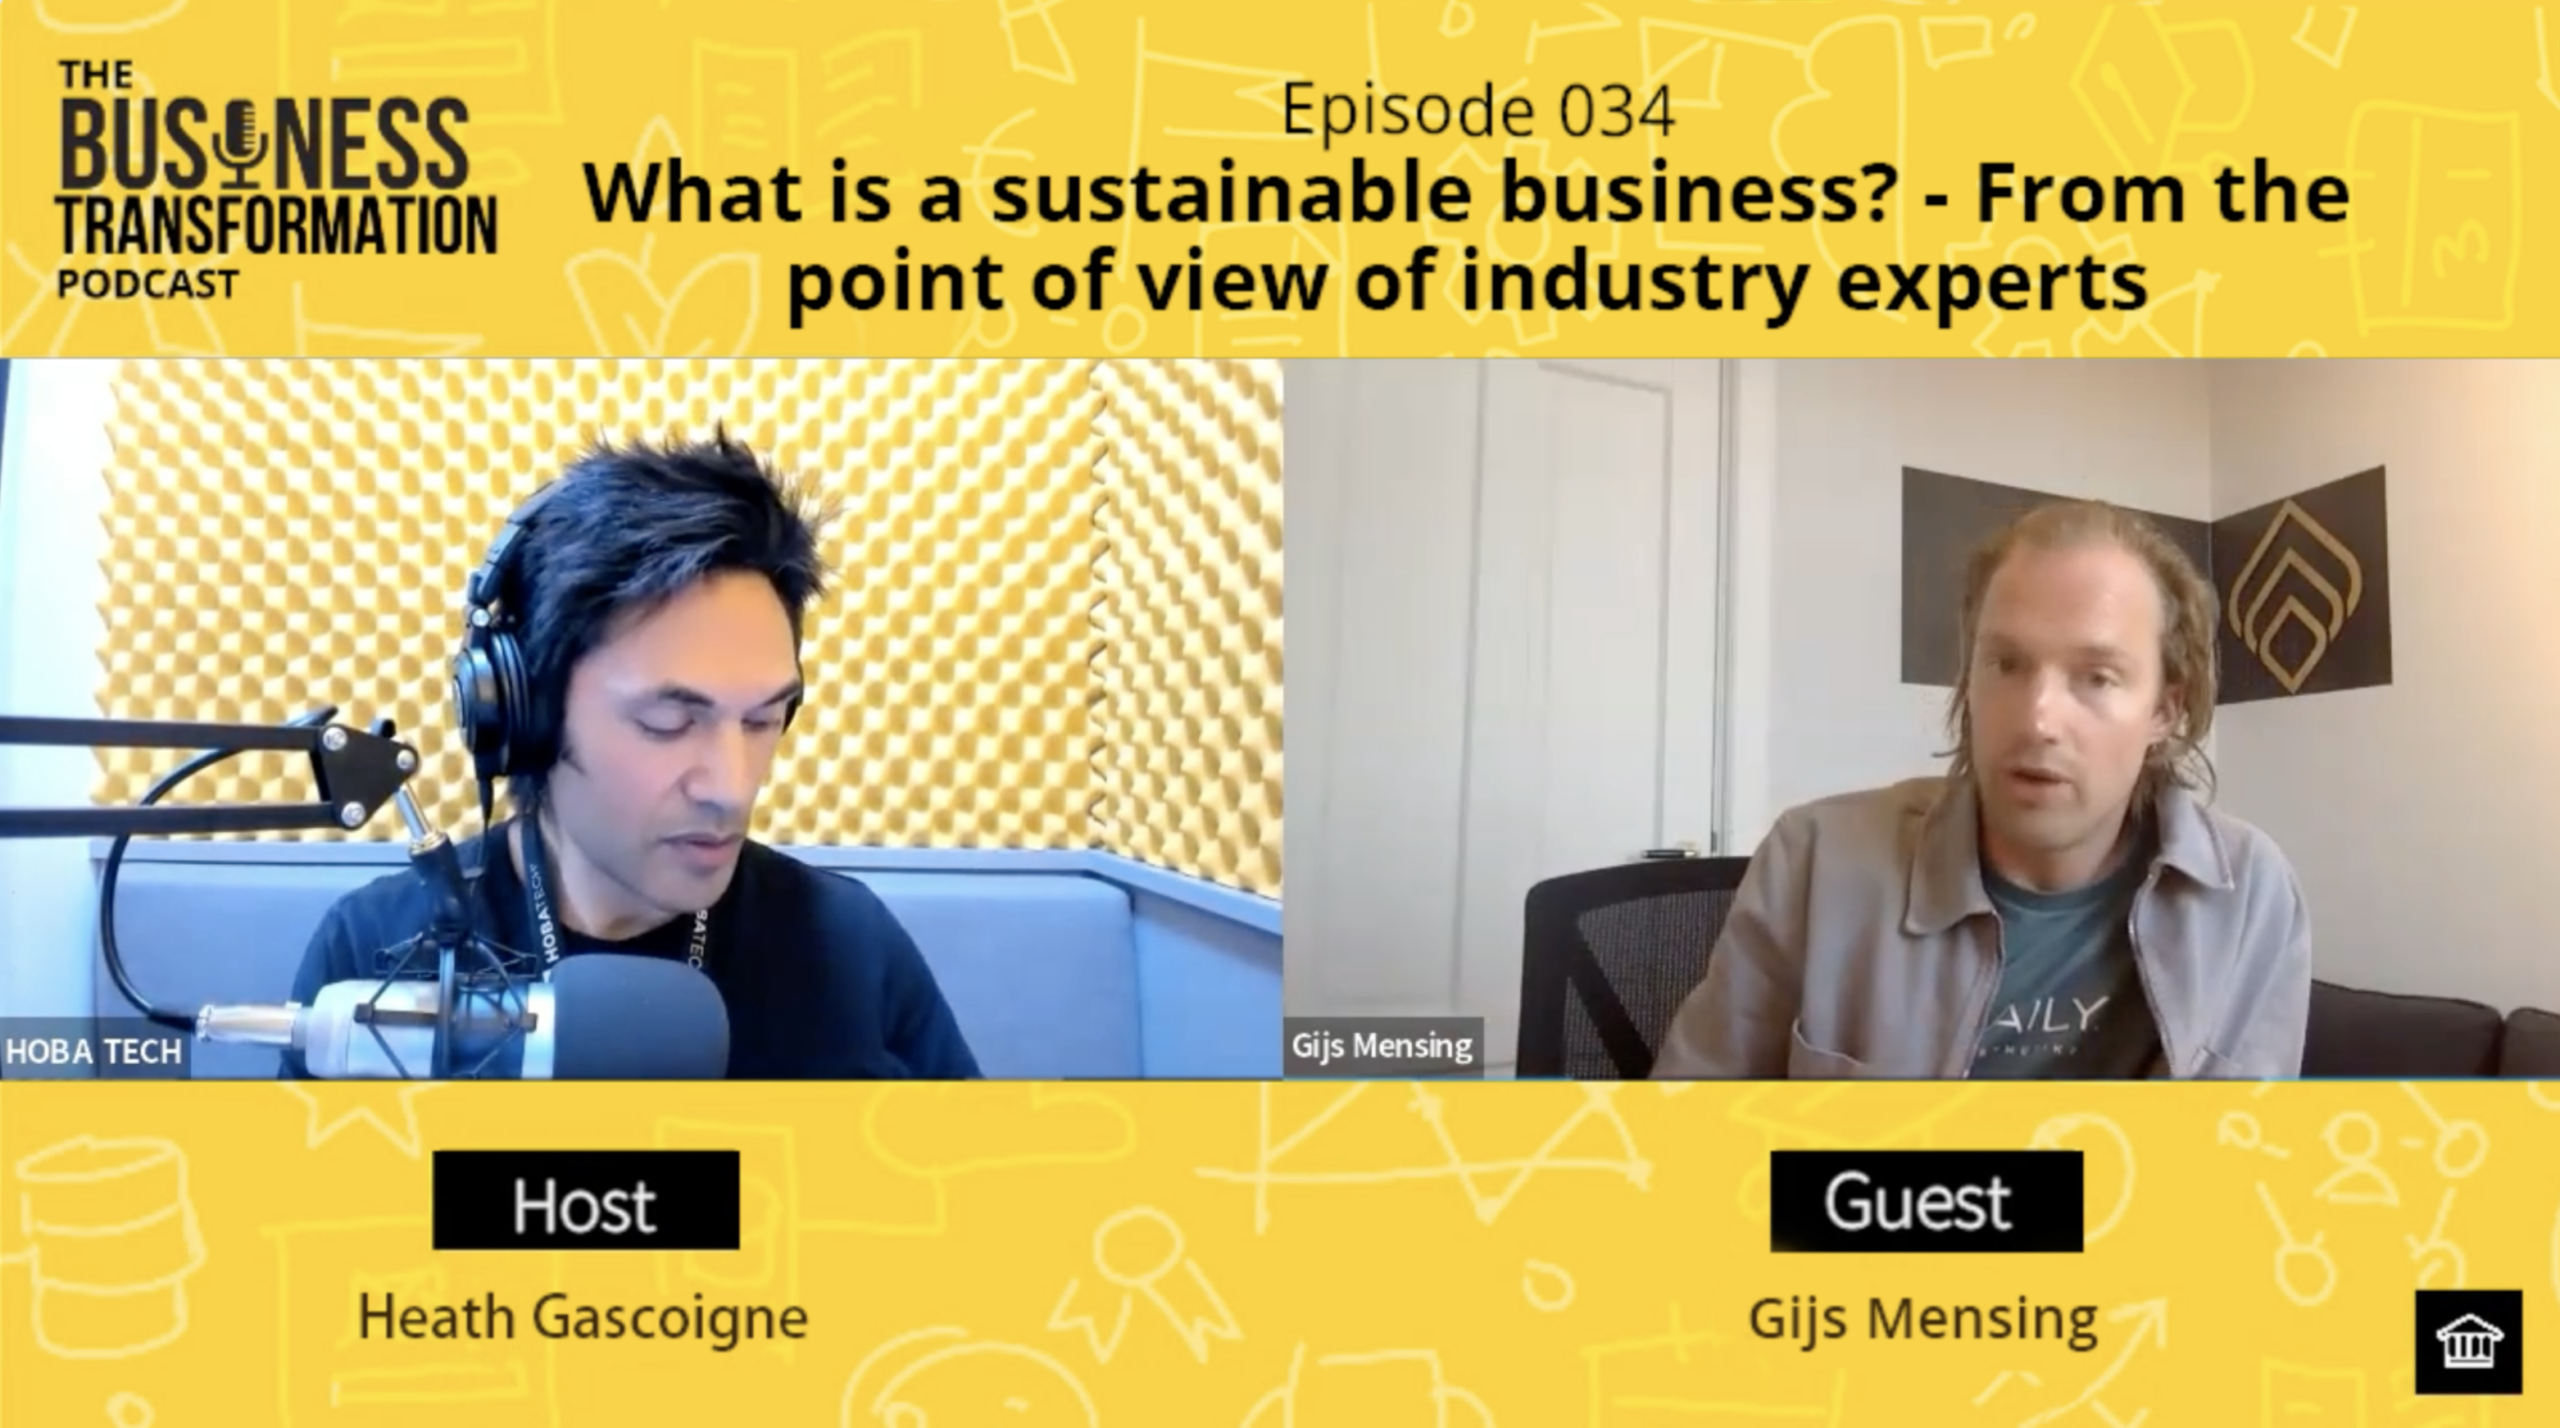 The Business Transformation Podcast-Episode 034 Gijs Mensing